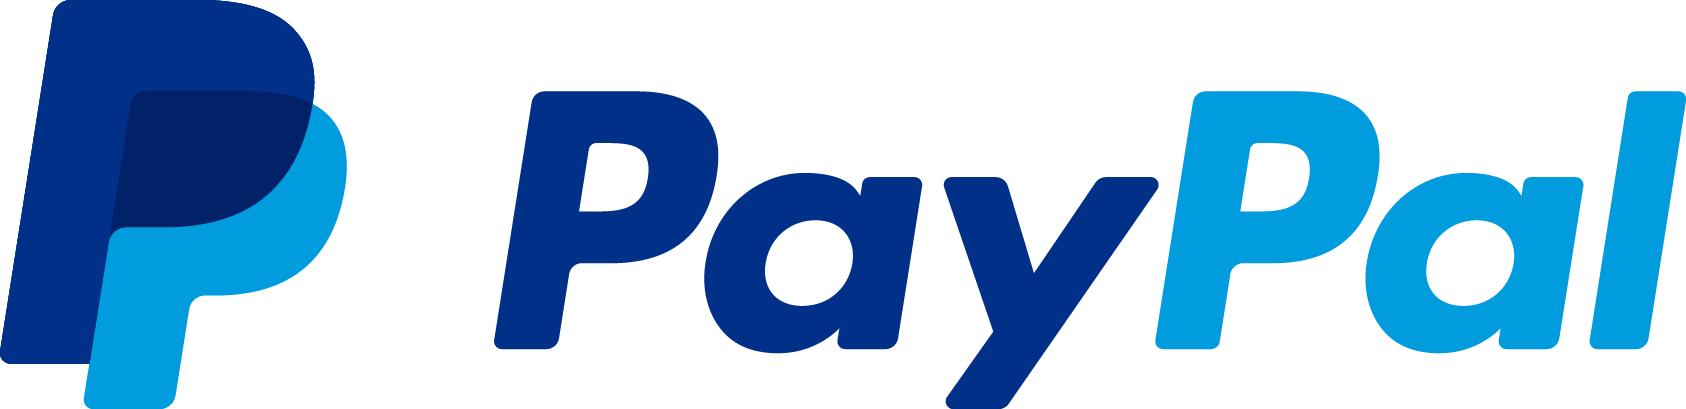 Paypal Fullcolor Horizontal Logo RGB